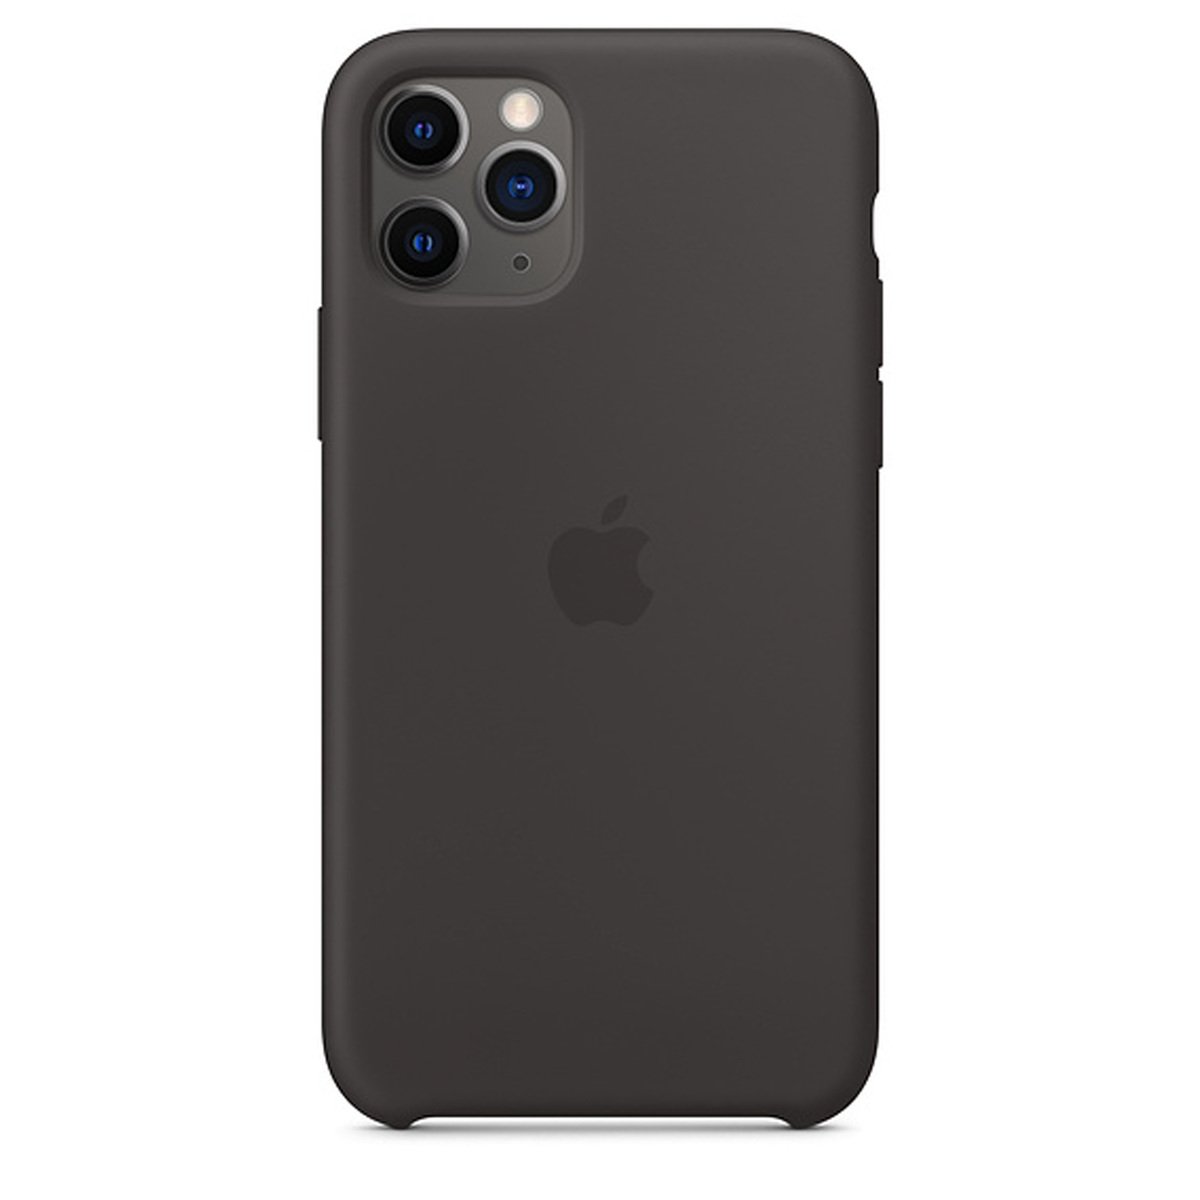 Apple iPhone11 Pro Silicone Case MWYN2ZM Black